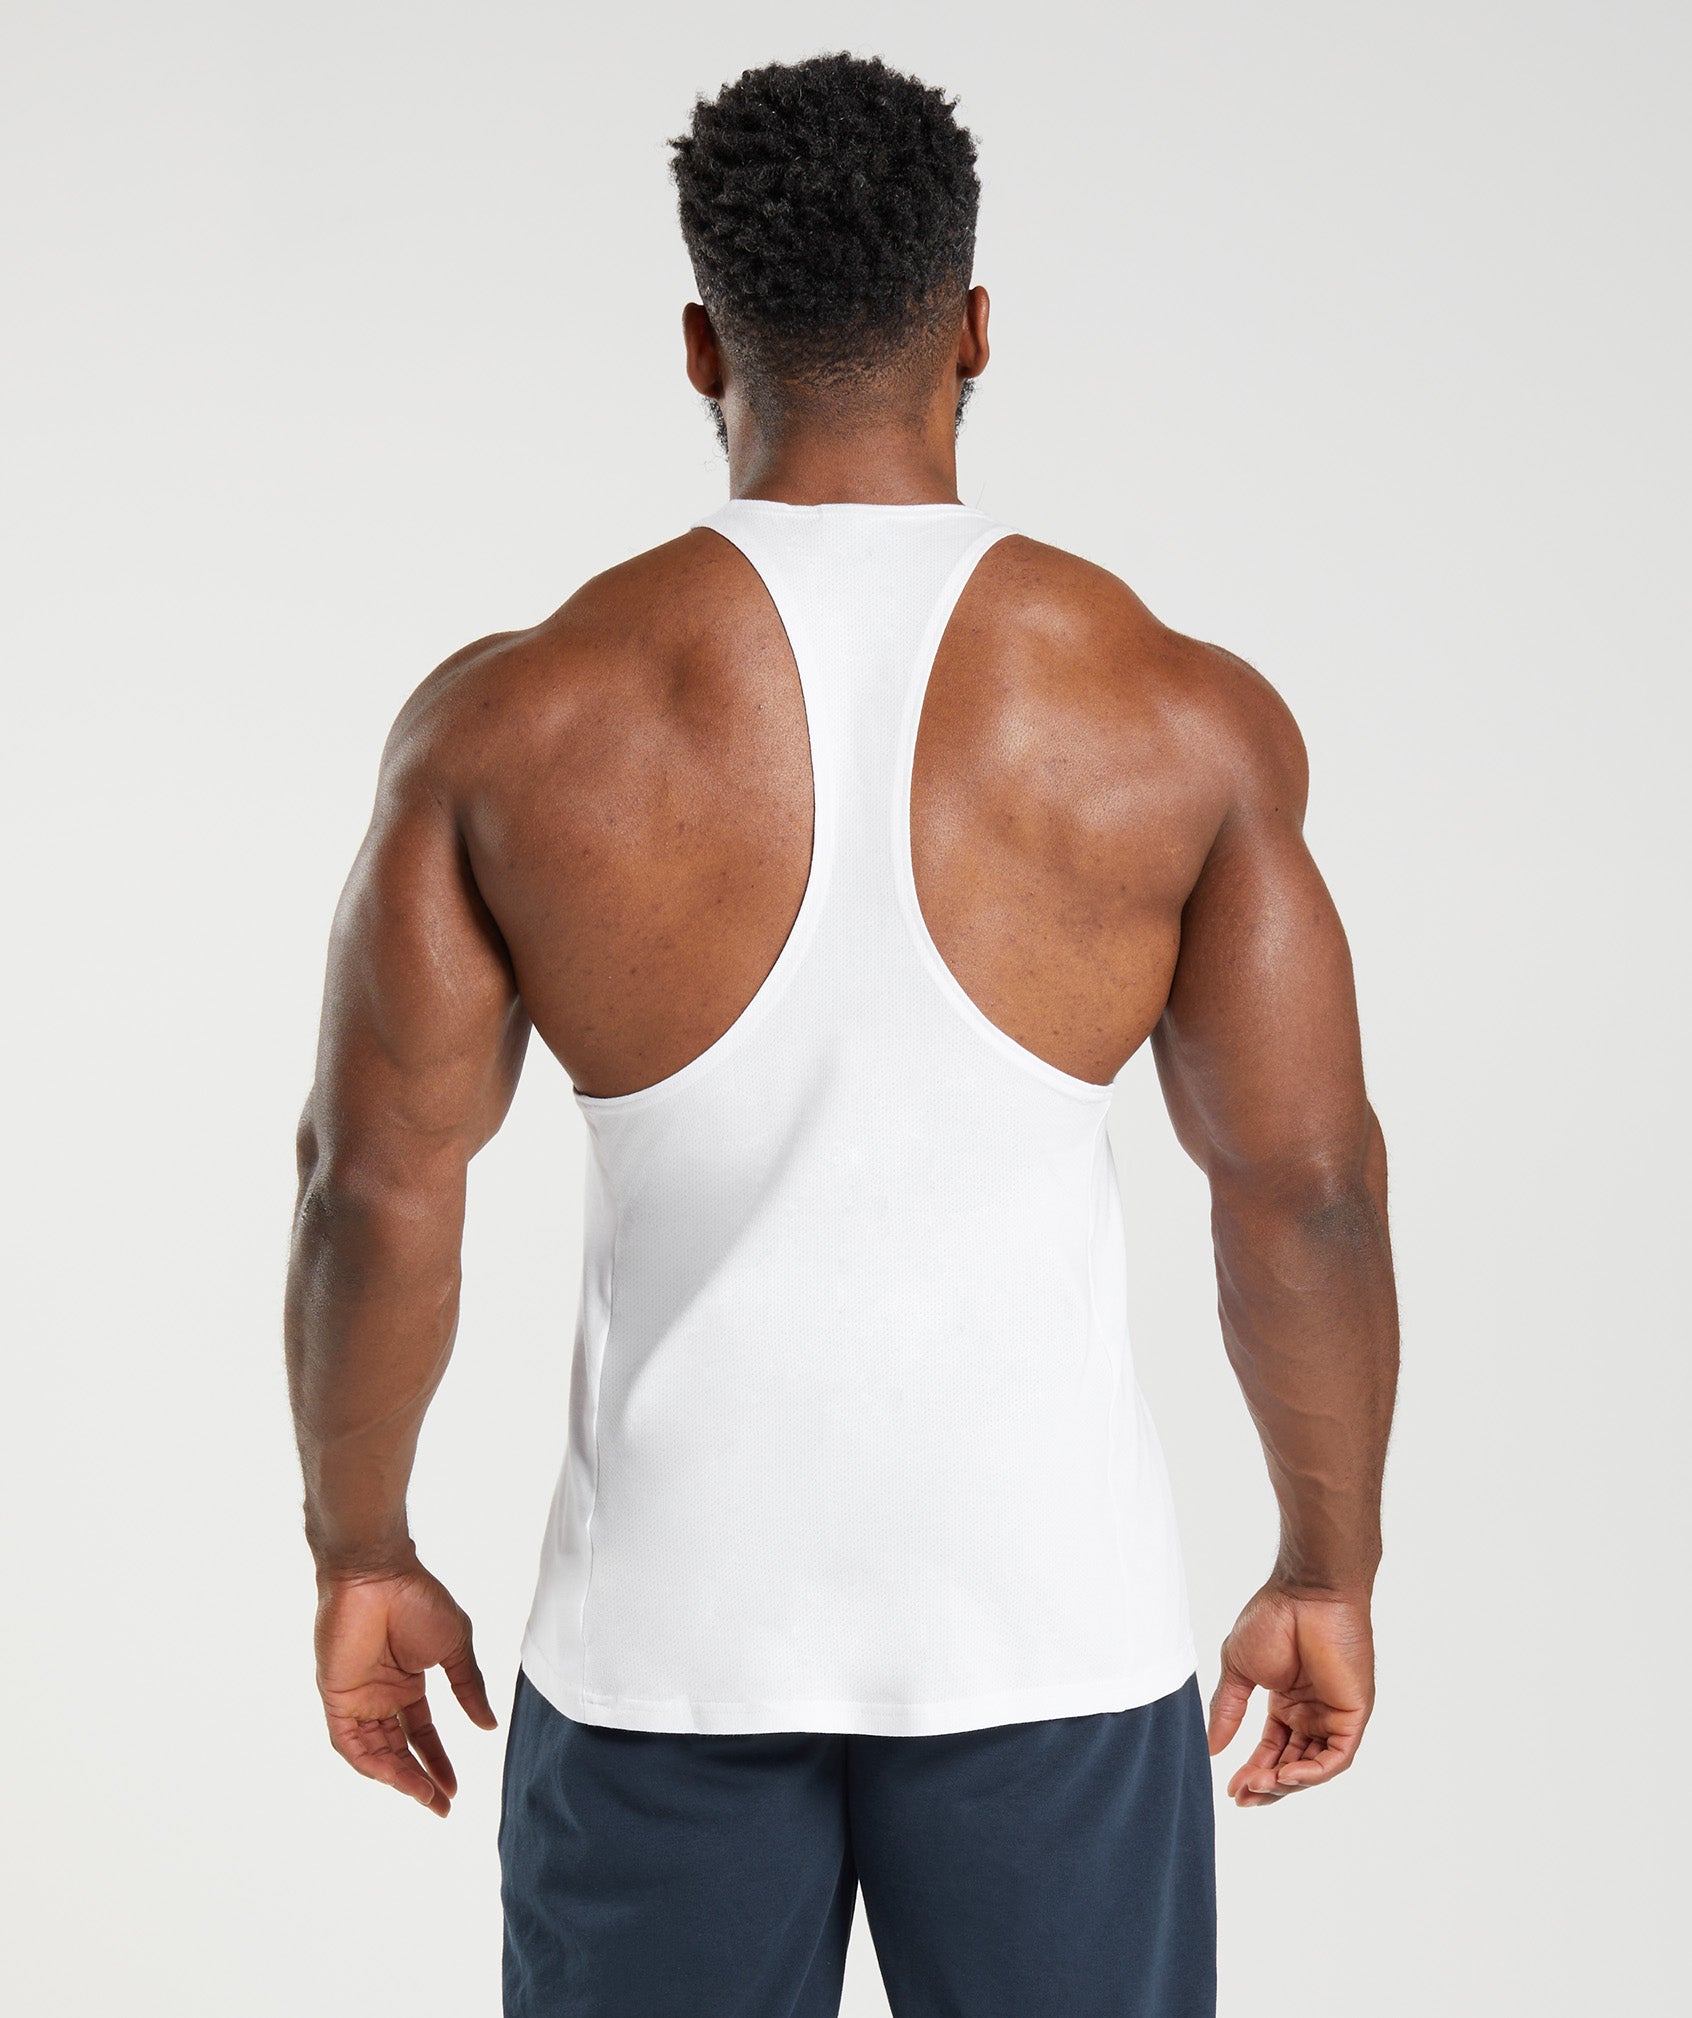 SEMIMAY Men's Gym Bodybuilding Stringer Tank Top Workout Muscle Cut Shirt  Fitness Sleeveless Vest Tank top 